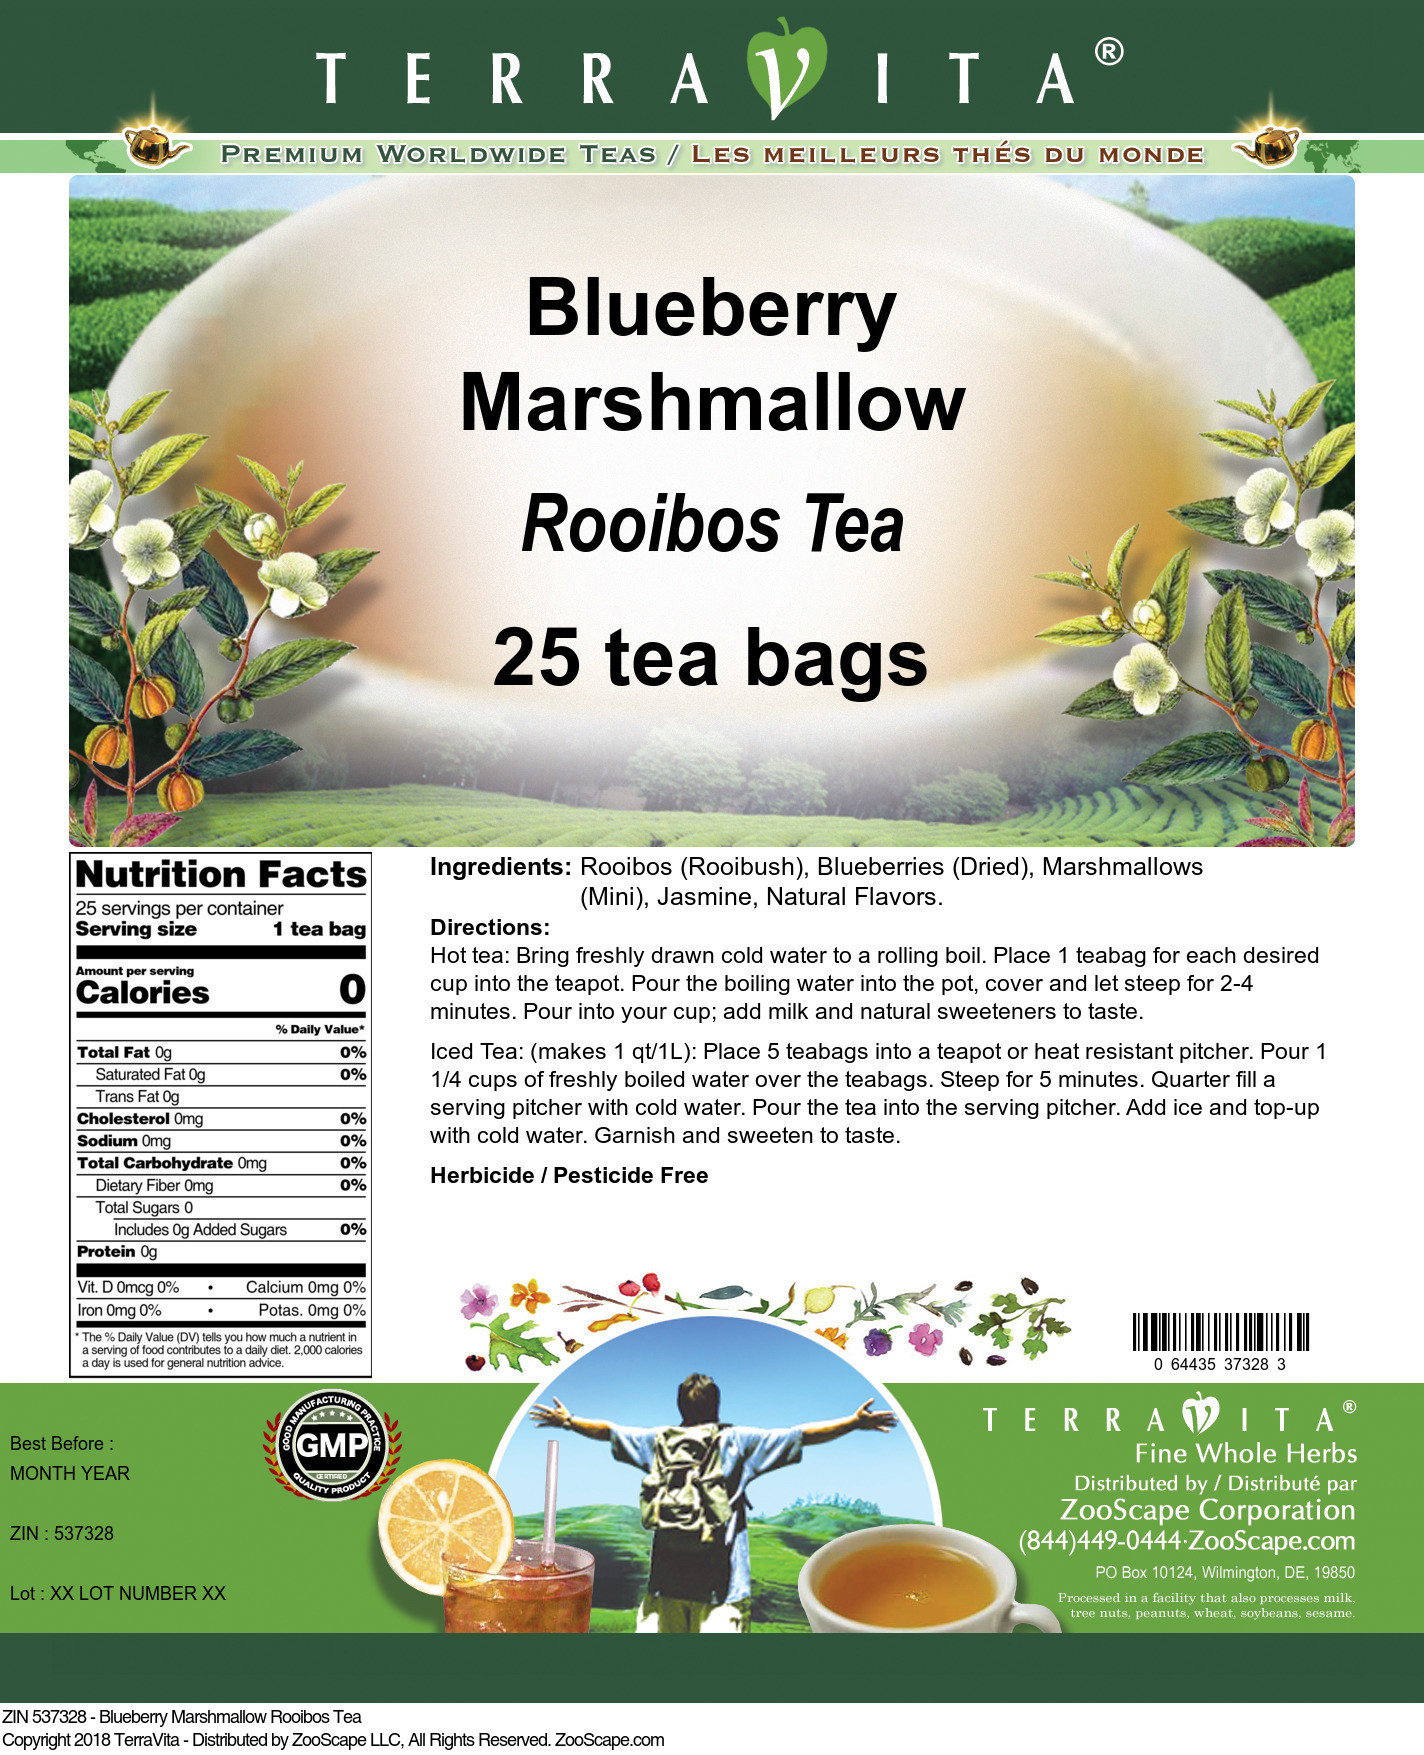 Blueberry Marshmallow Rooibos Tea - Label